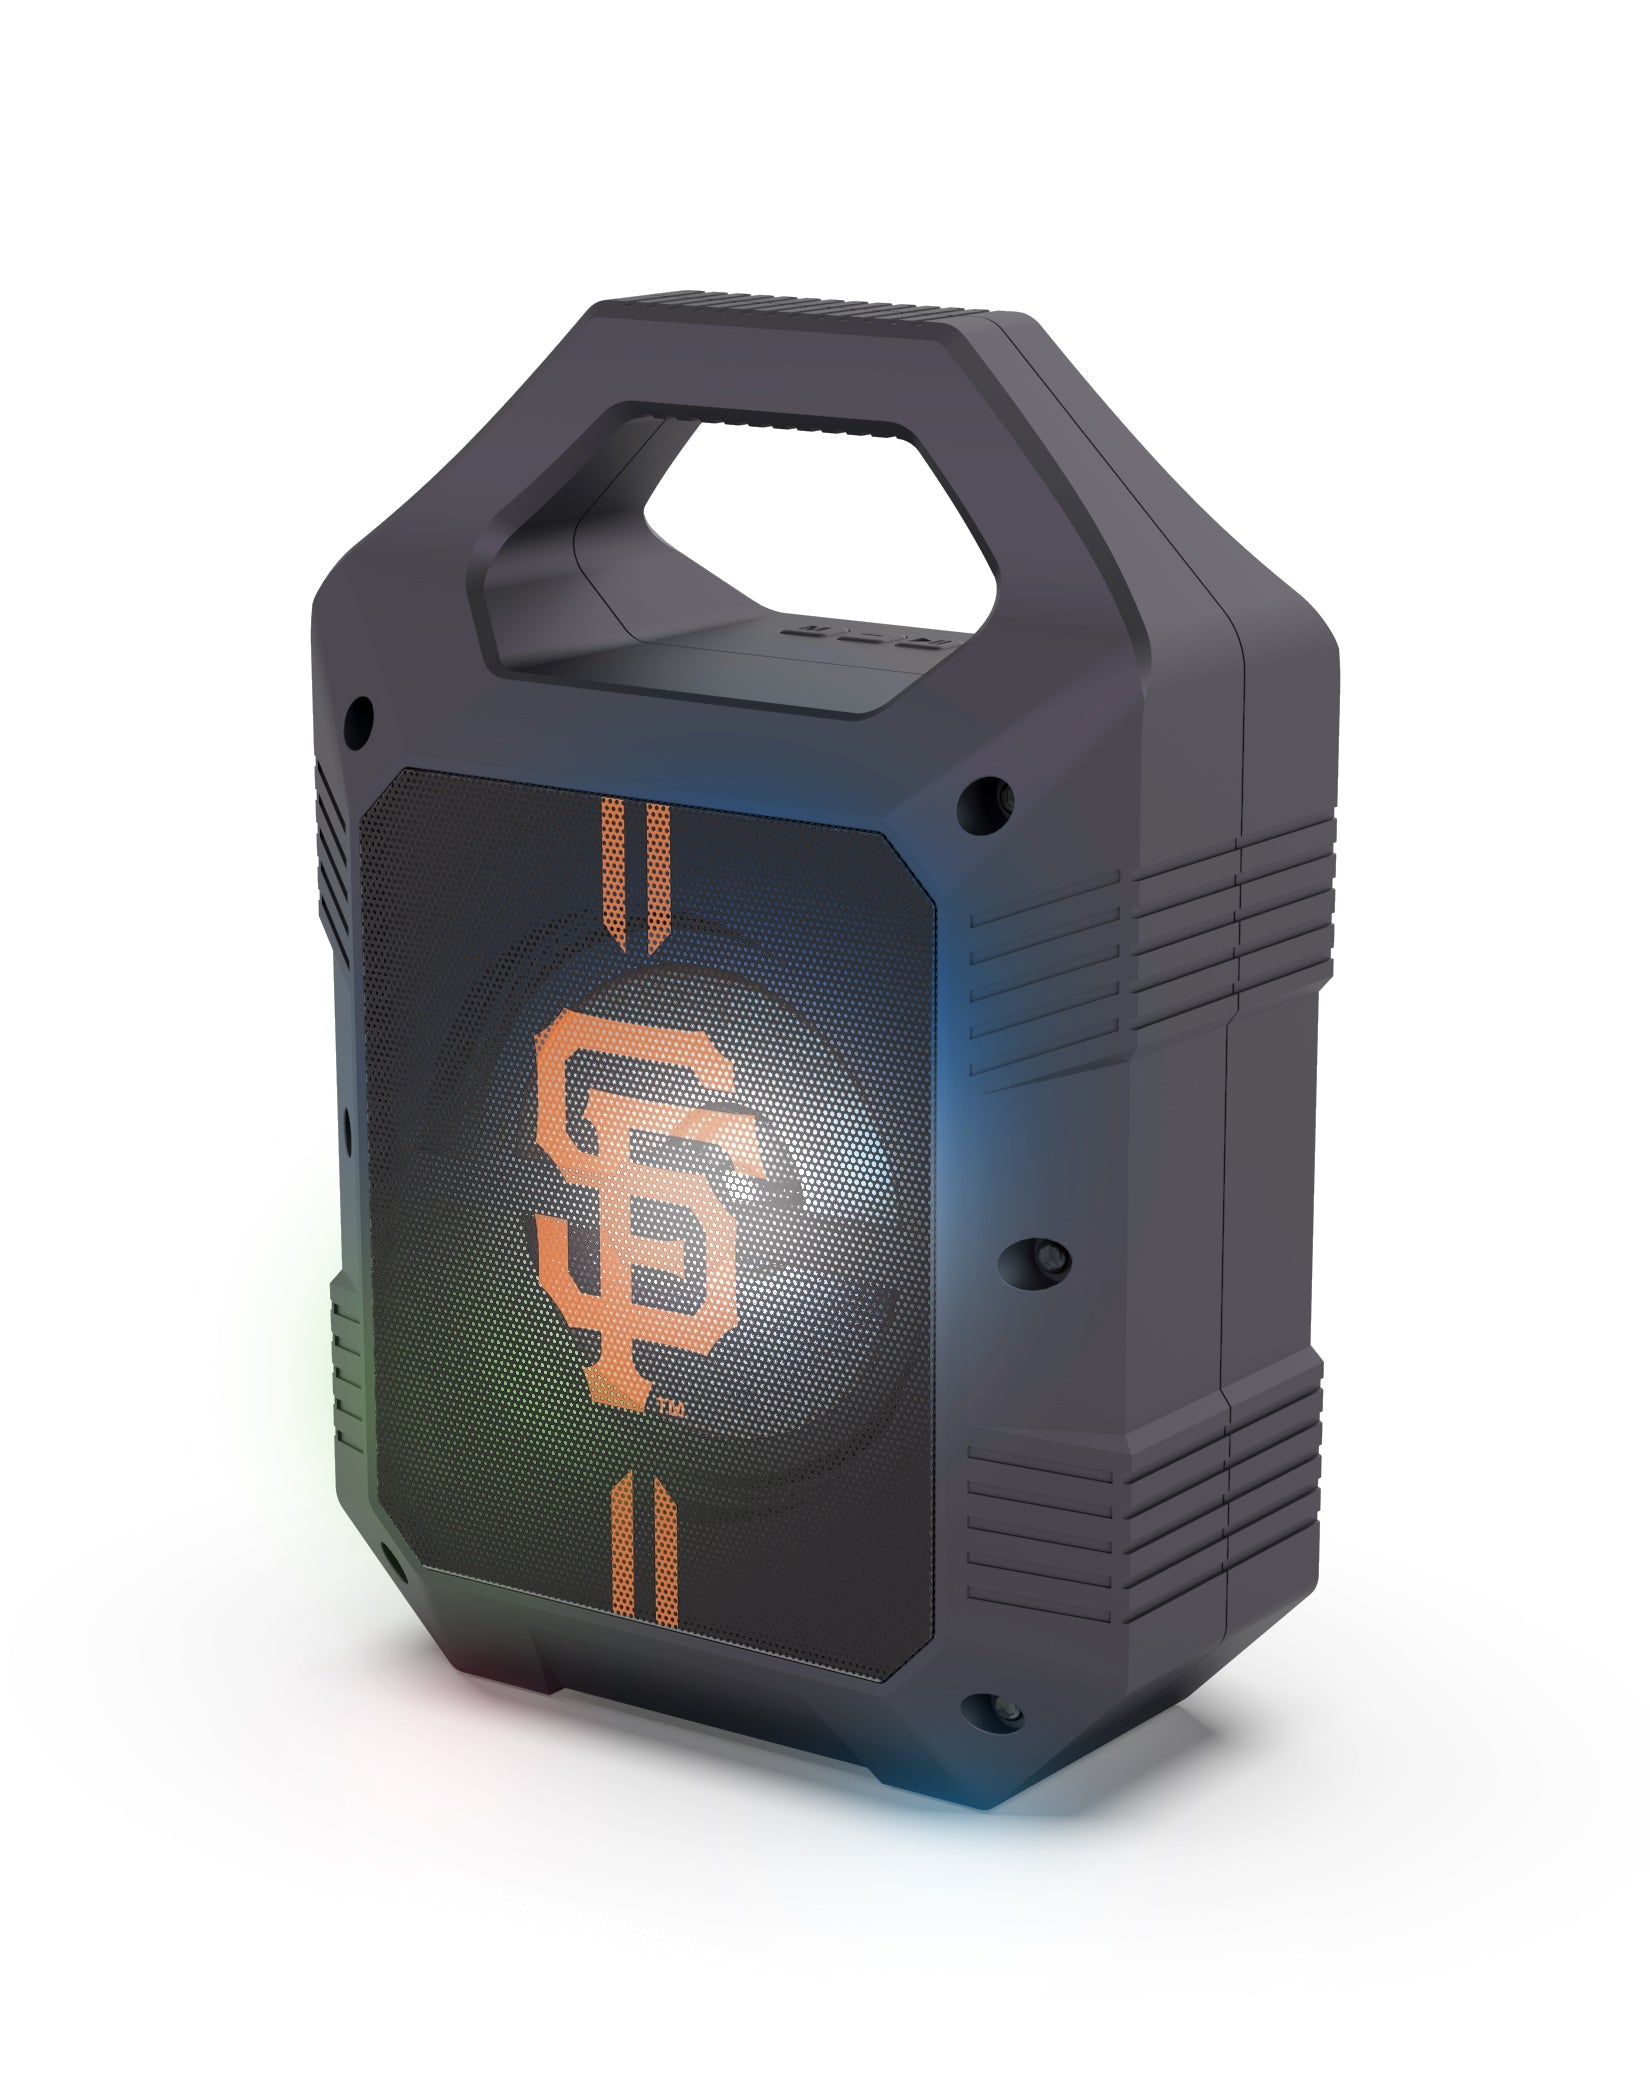 MLB Shockbox XL Bluetooth Speaker